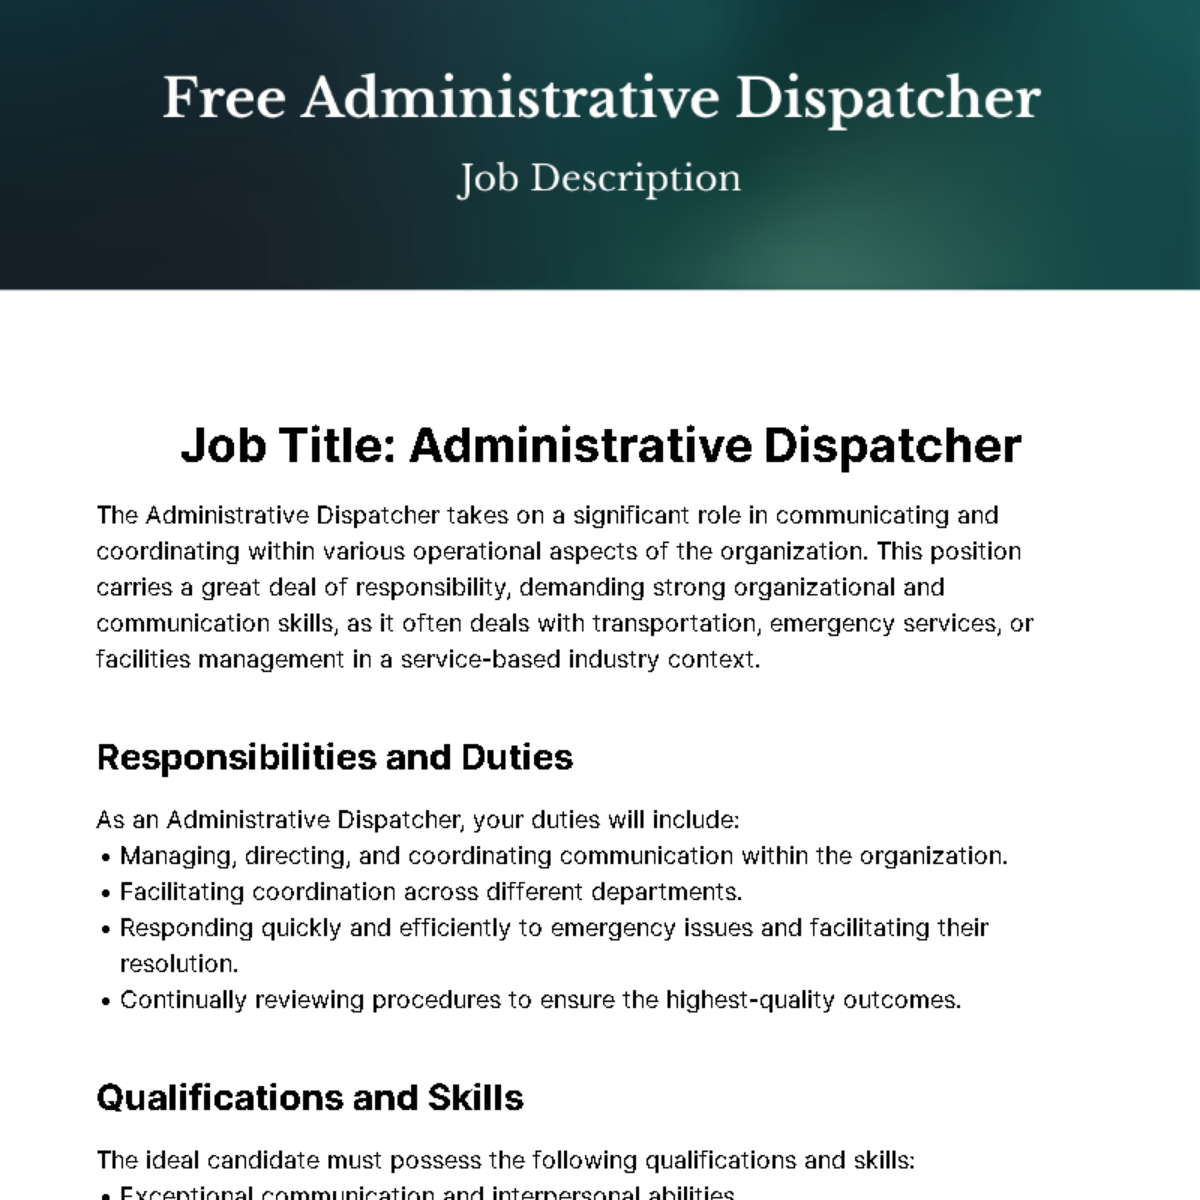 Free Administrative Dispatcher Job Description Template